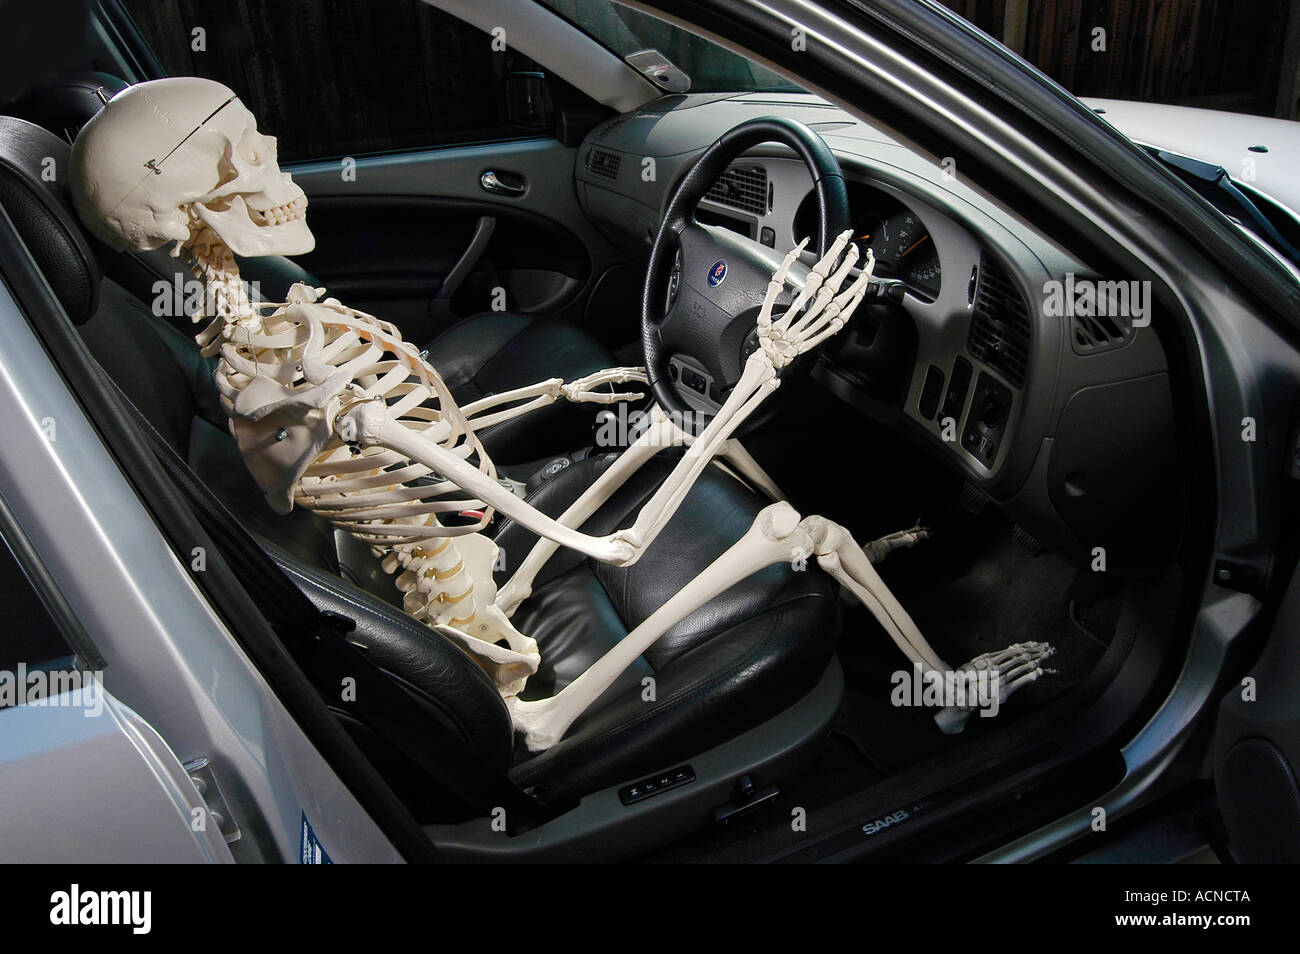 ride sharing skeleton Stock Photo - Alamy